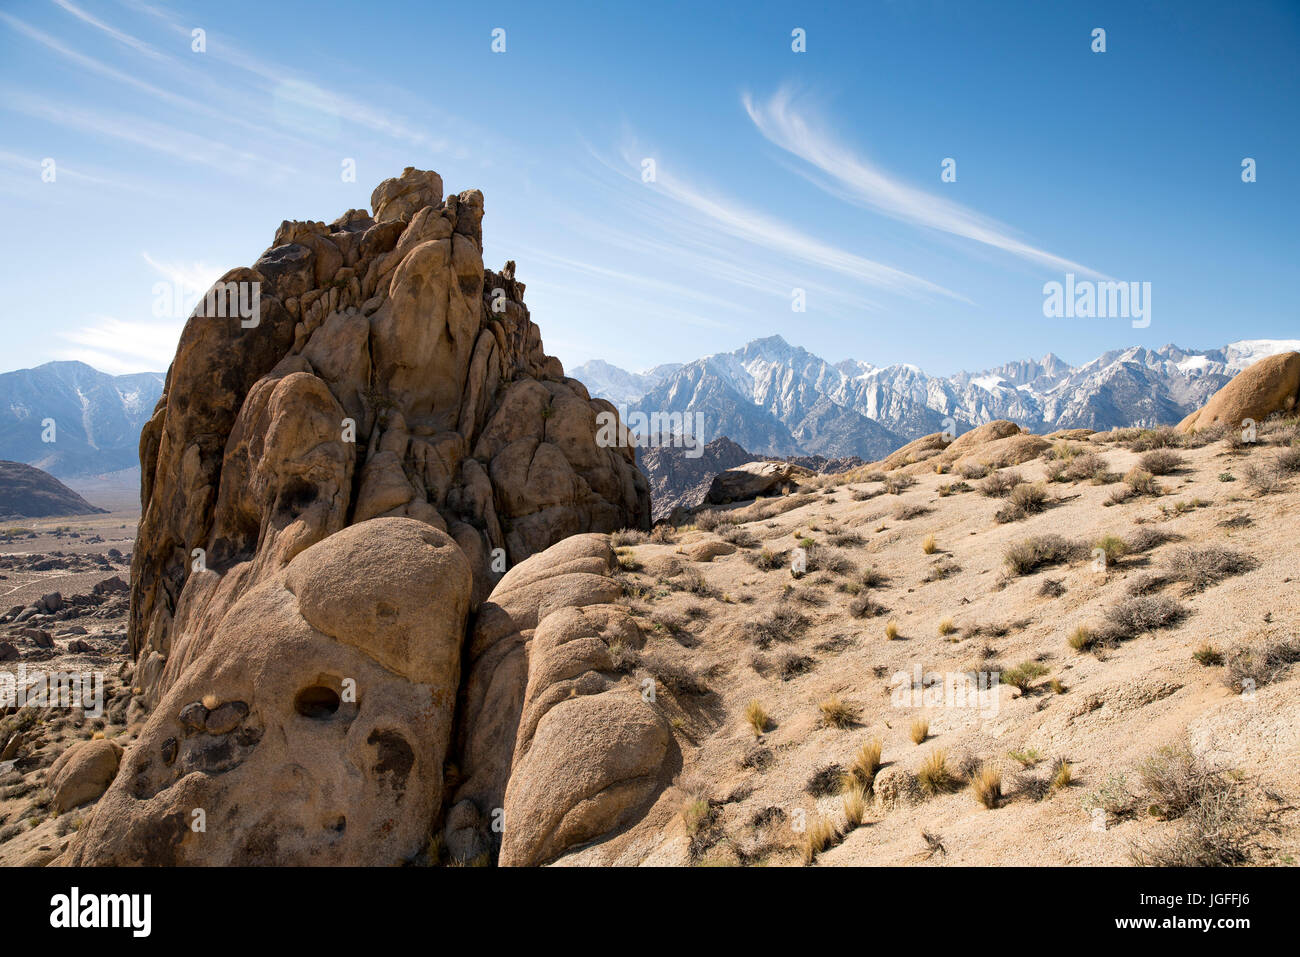 Rock formation in desert landscape Stock Photo